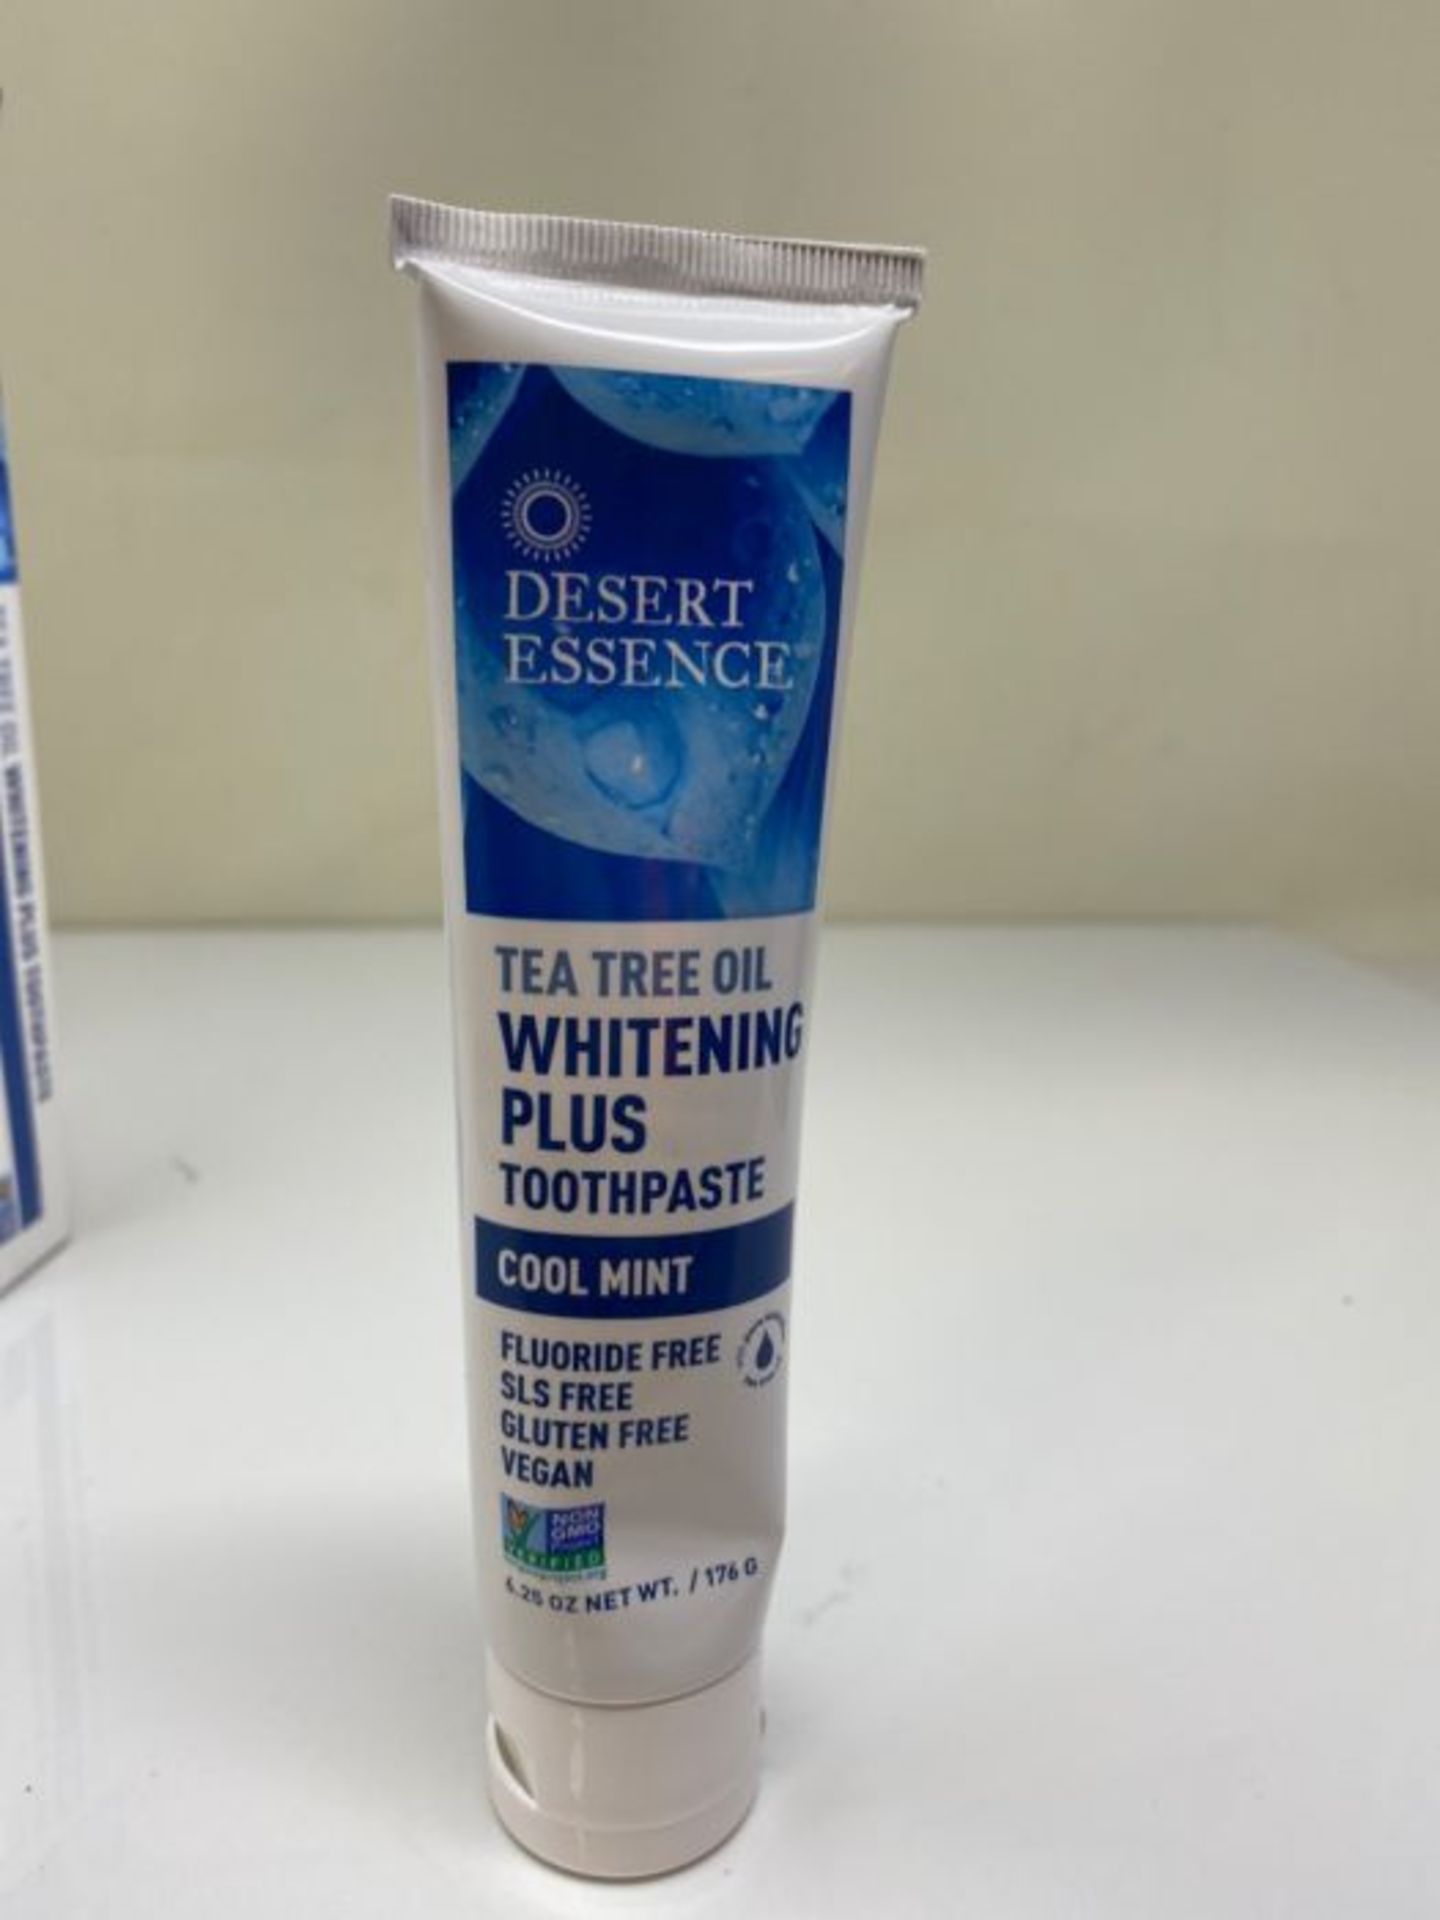 Desert Essence Whitening Plus Cool Mint Toothpaste - 6.25 oz - Image 3 of 3